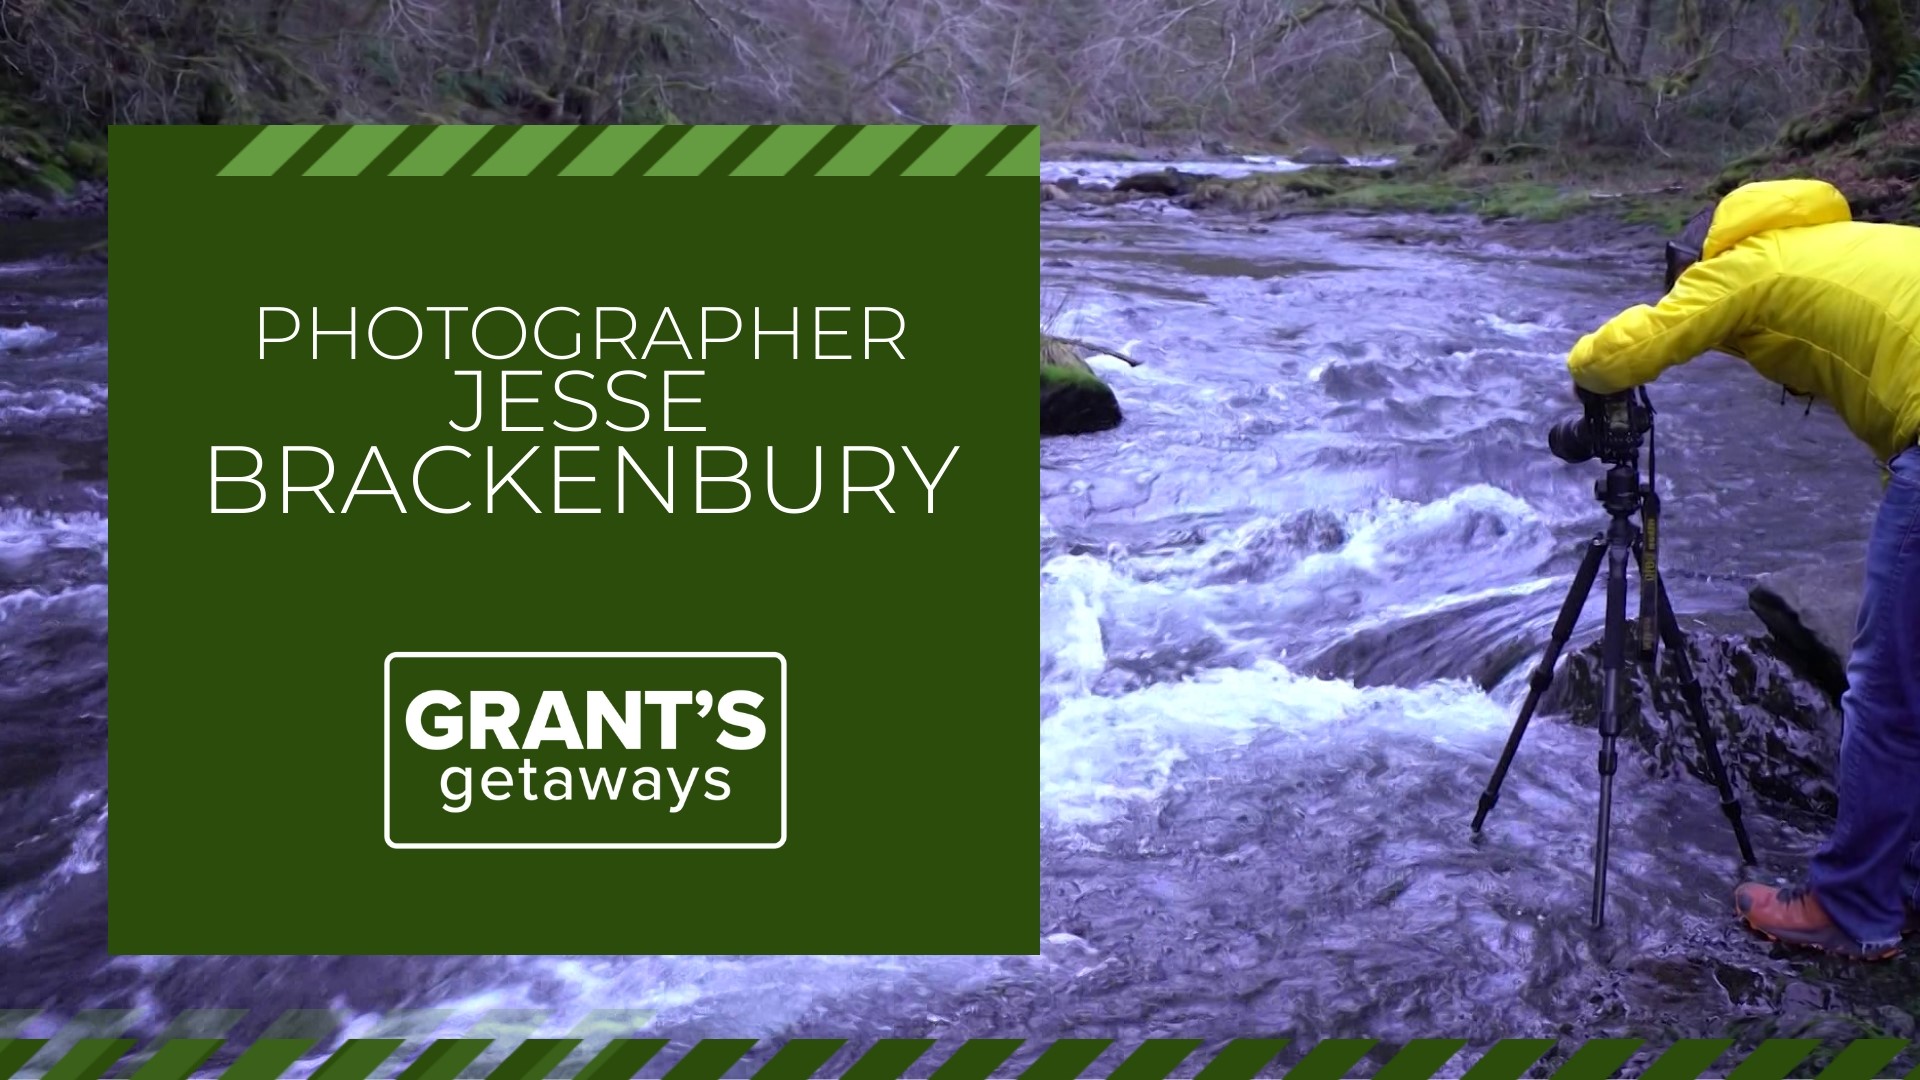 Grant joins landscape photographer Jesse Brakenbury along the Wilson River in the Tillamook State Forest.